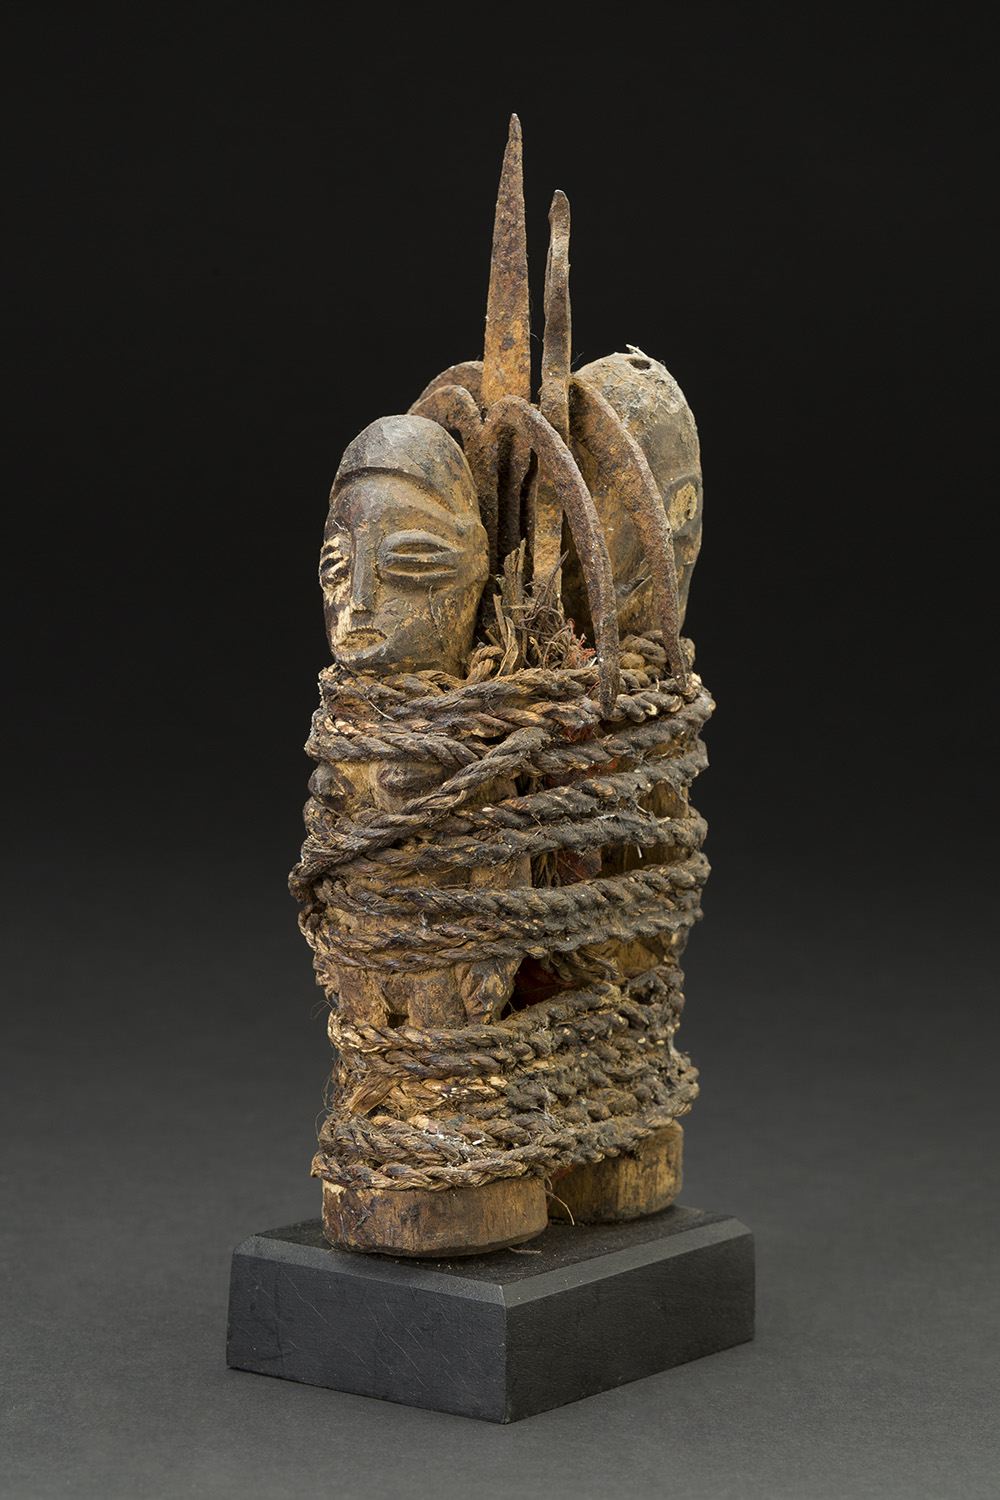   Africa    Vodun Sculpture - Adja People - Benin  , Mid. 20th C. Wood, metal, natural fibers 9 x 3.5 x 3.5 inches 22.9 x 8.9 x 8.9 cm Af 308 